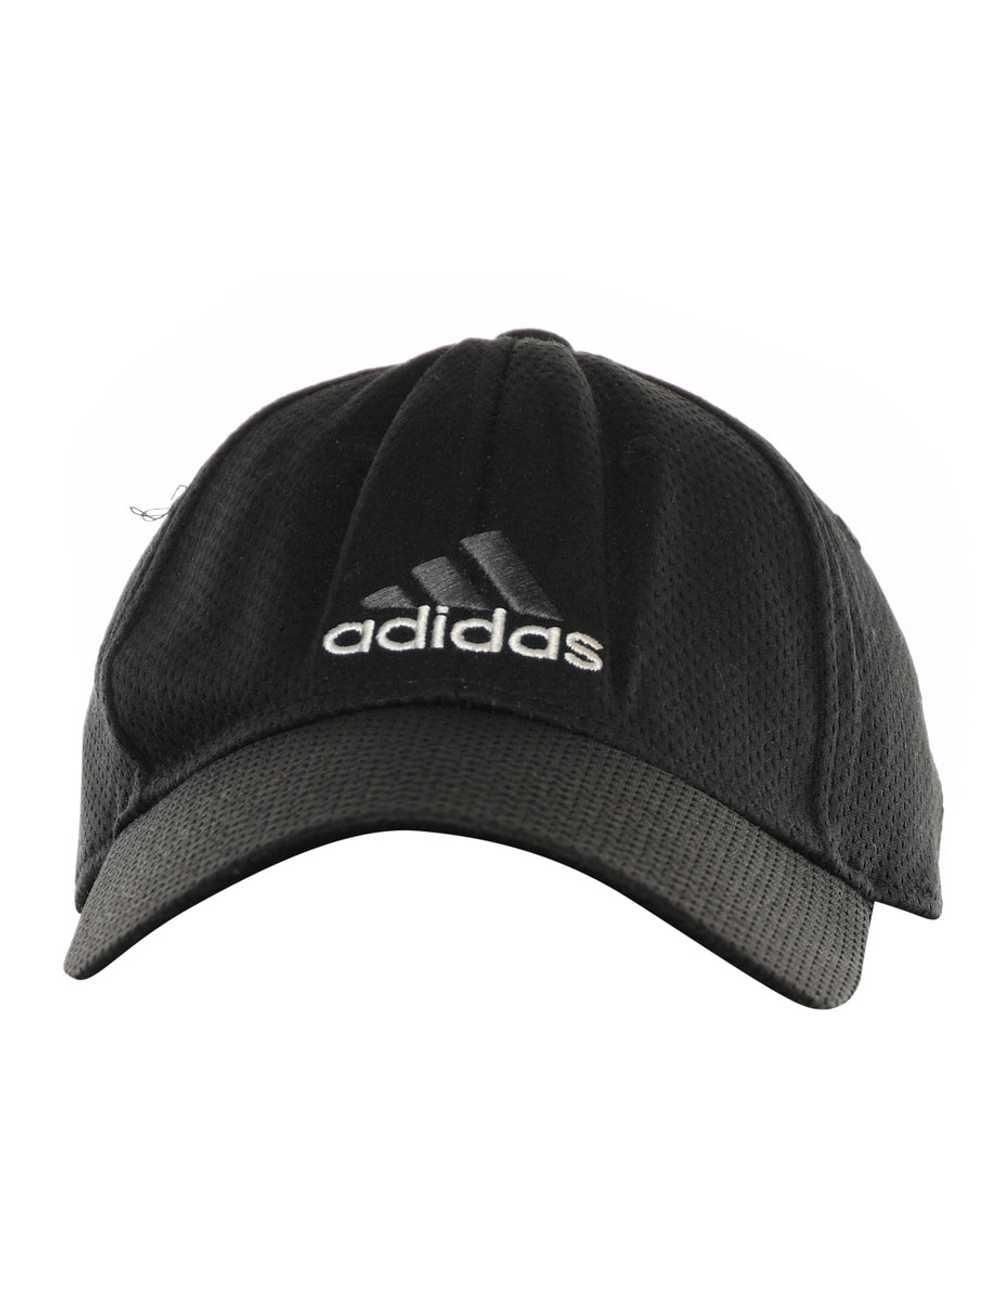 Adidas Black Sporty Cap - M - image 1